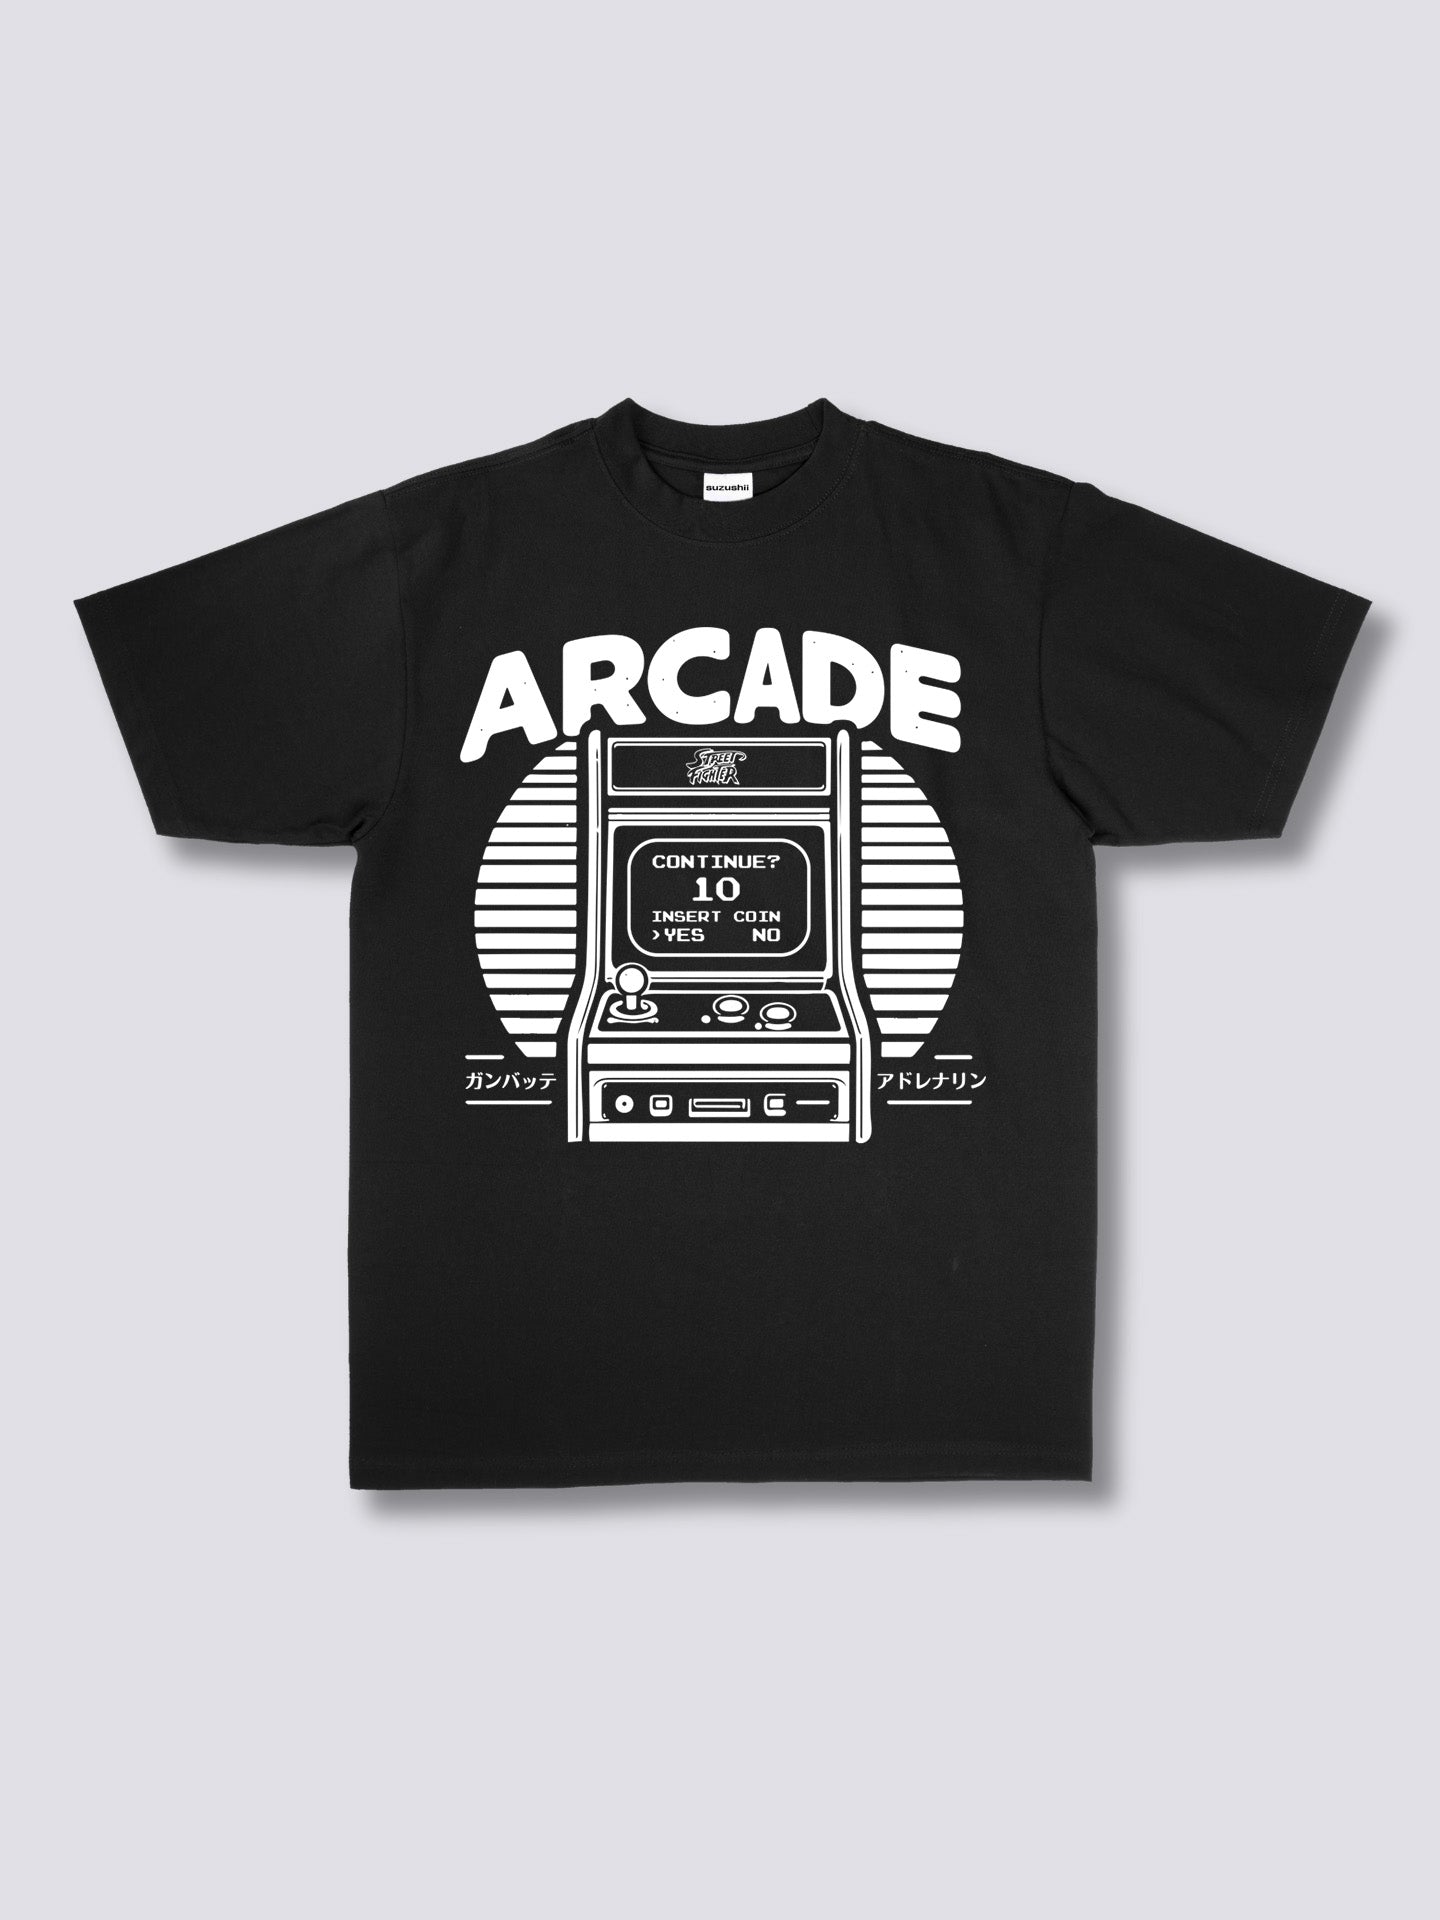 Arcade Game T-Shirt